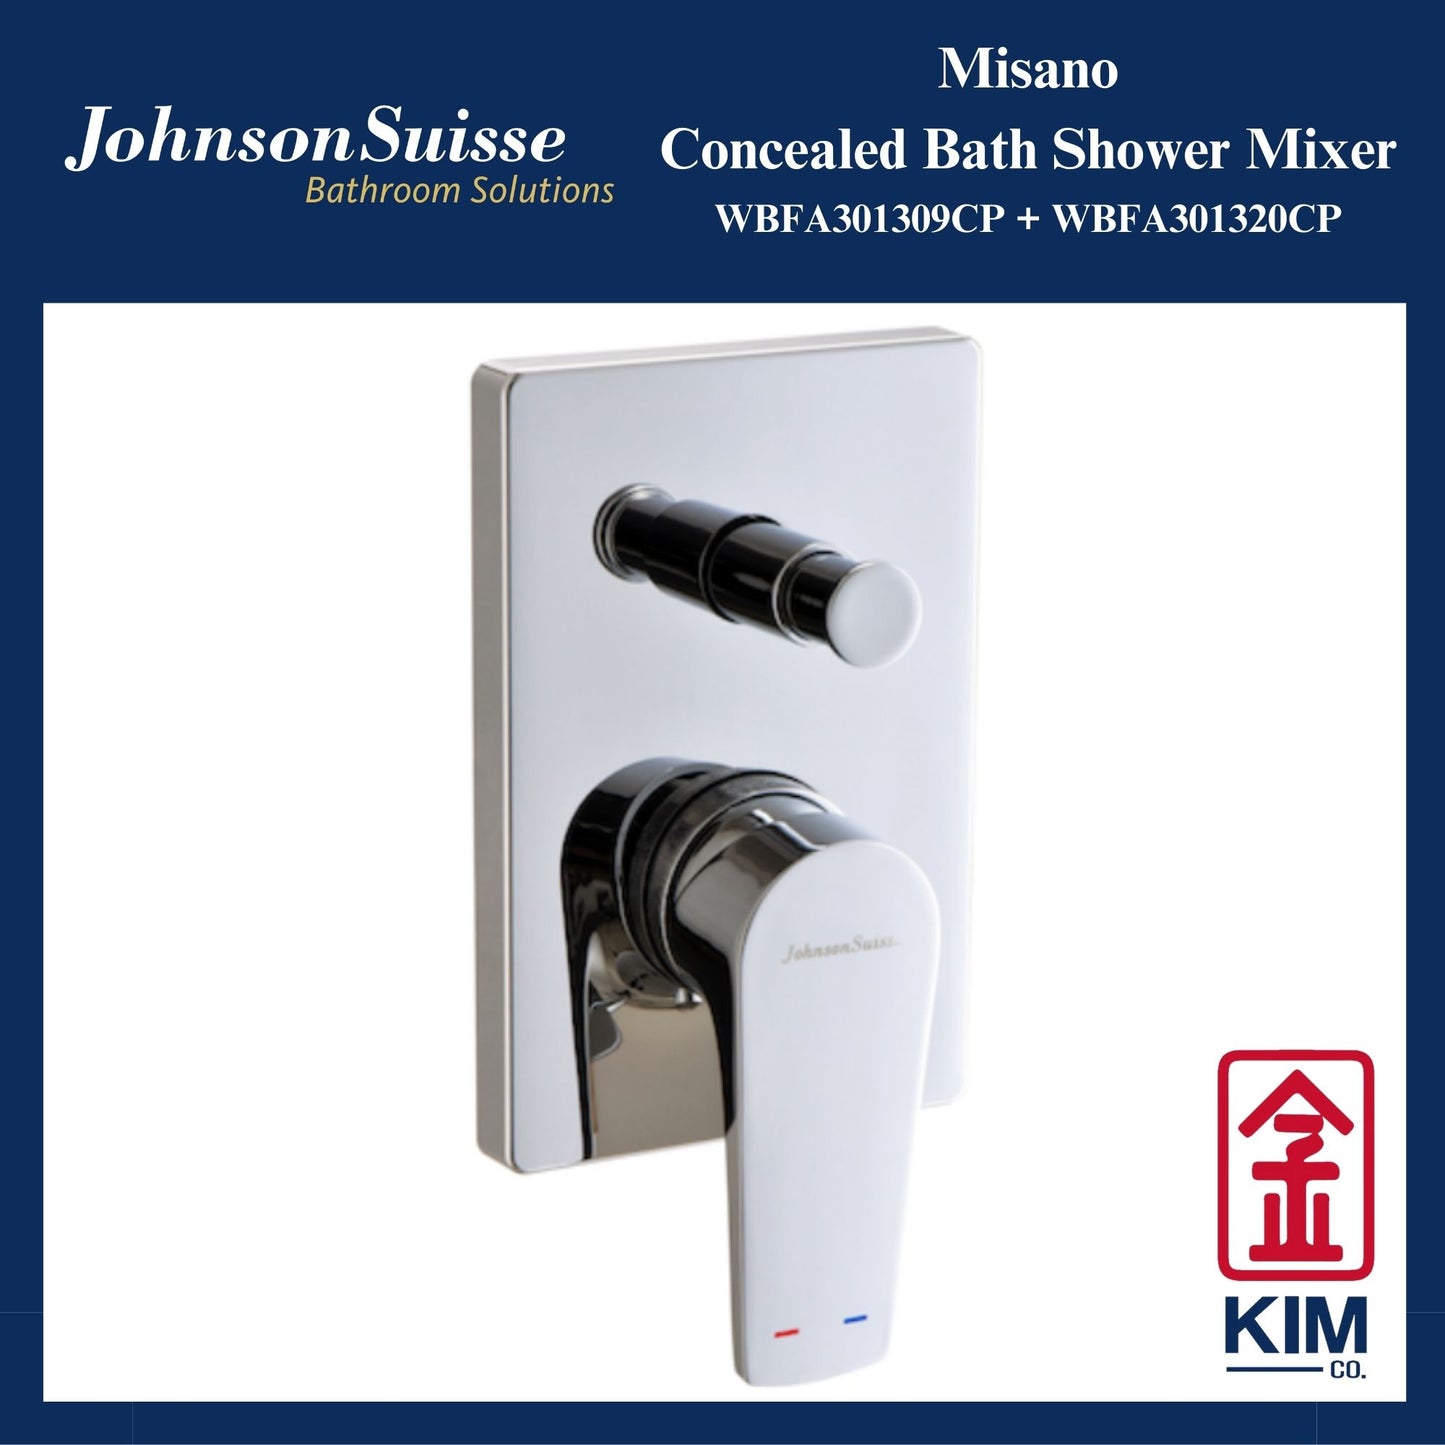 Johnson Suisse Misano Concealed Bath Shower Mixer With Diverter (WBFA301309CP + WBFA301320CP)